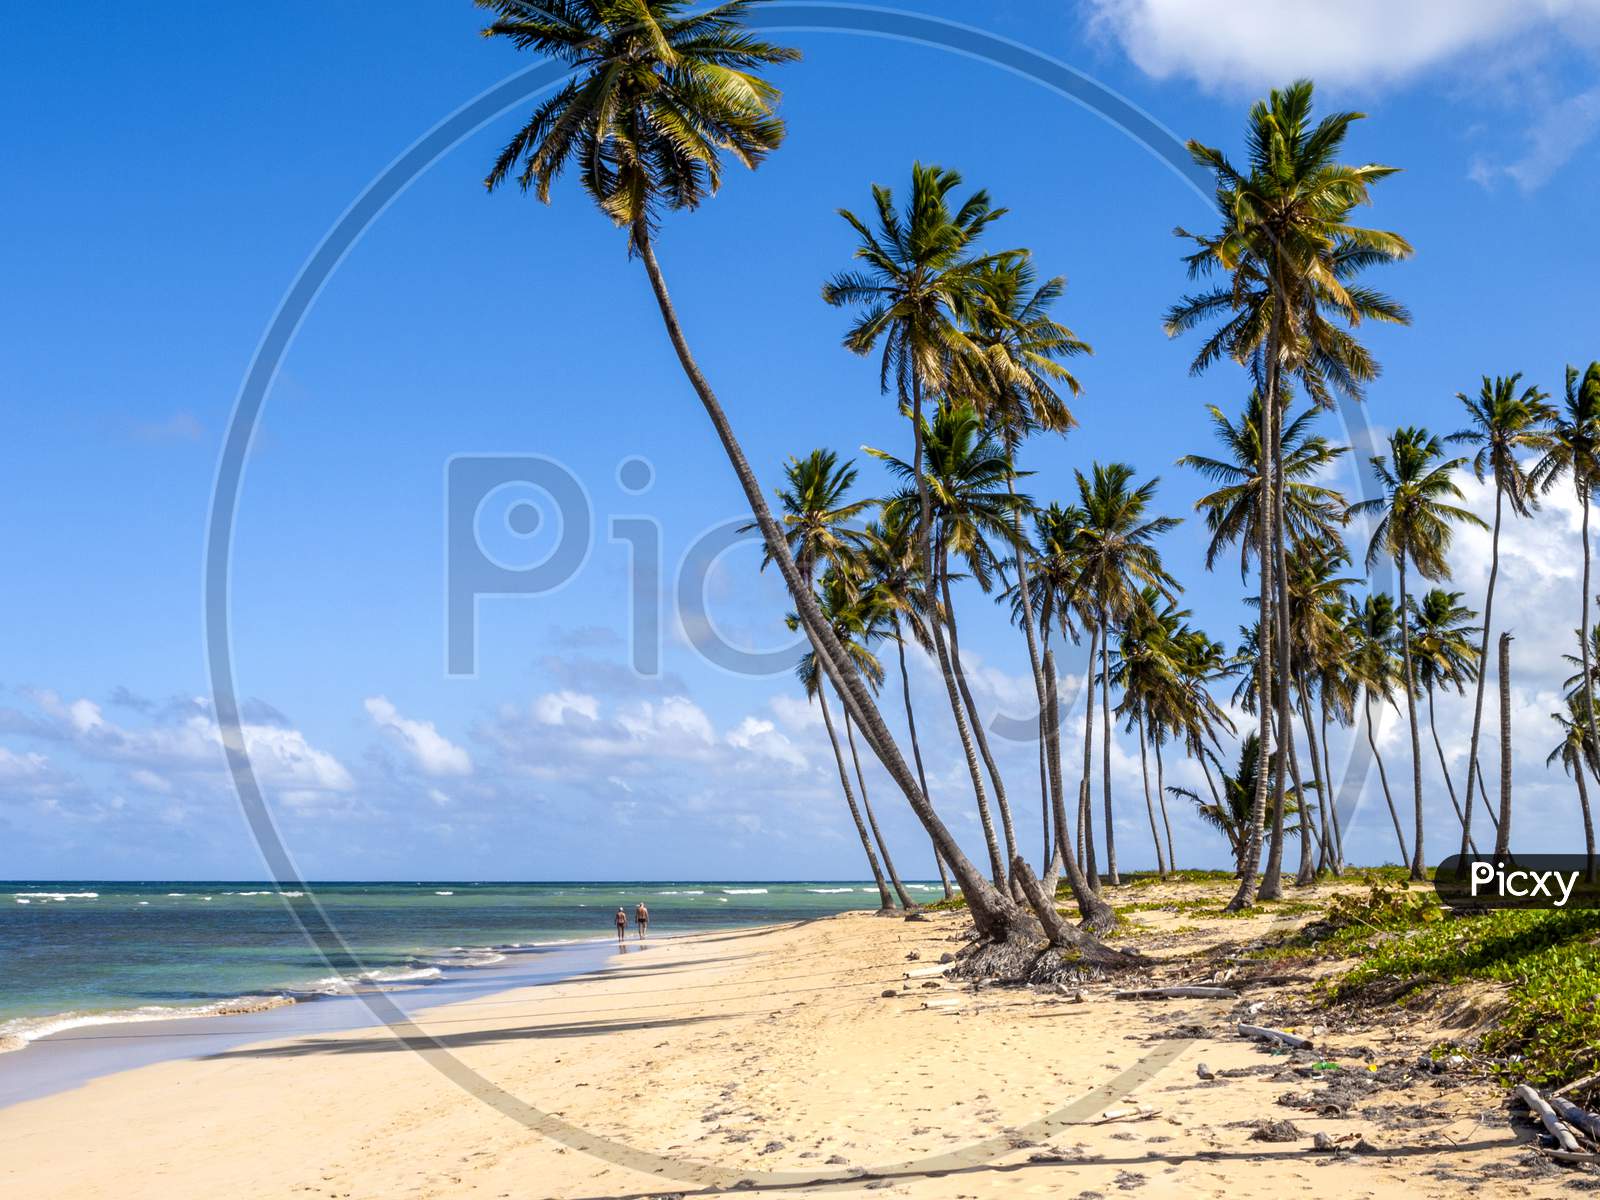 A Caribbean beach with palm trees and blue sky